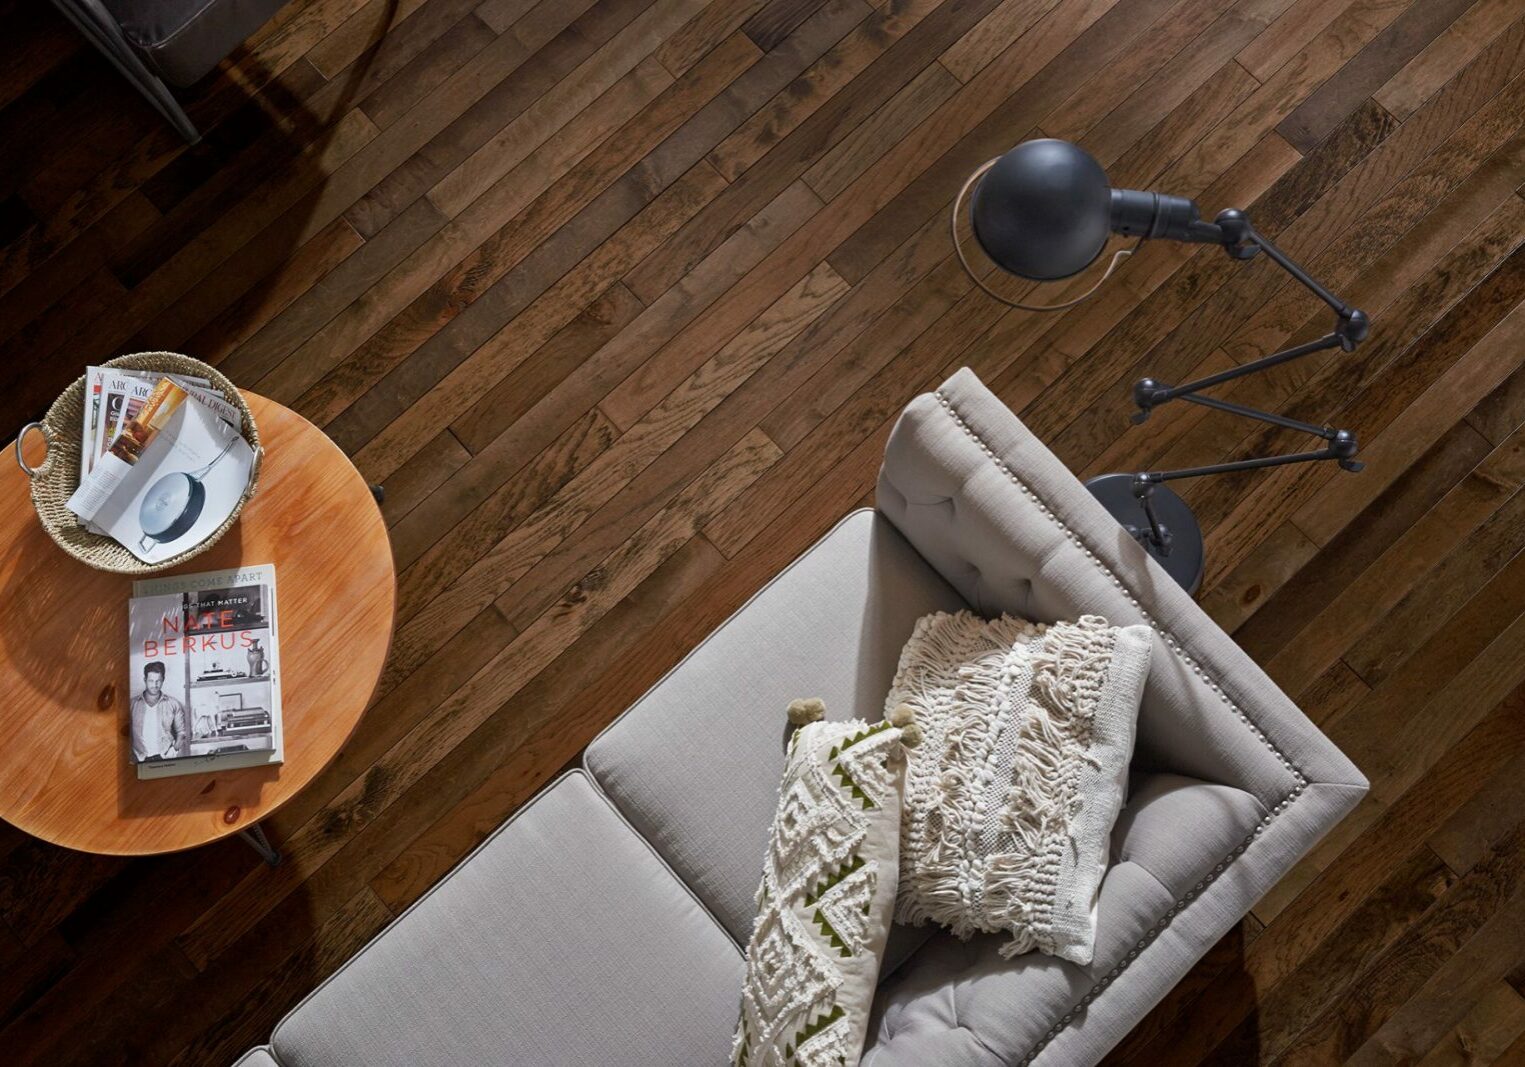 Hardwood flooring | H&R Carpets and Flooring